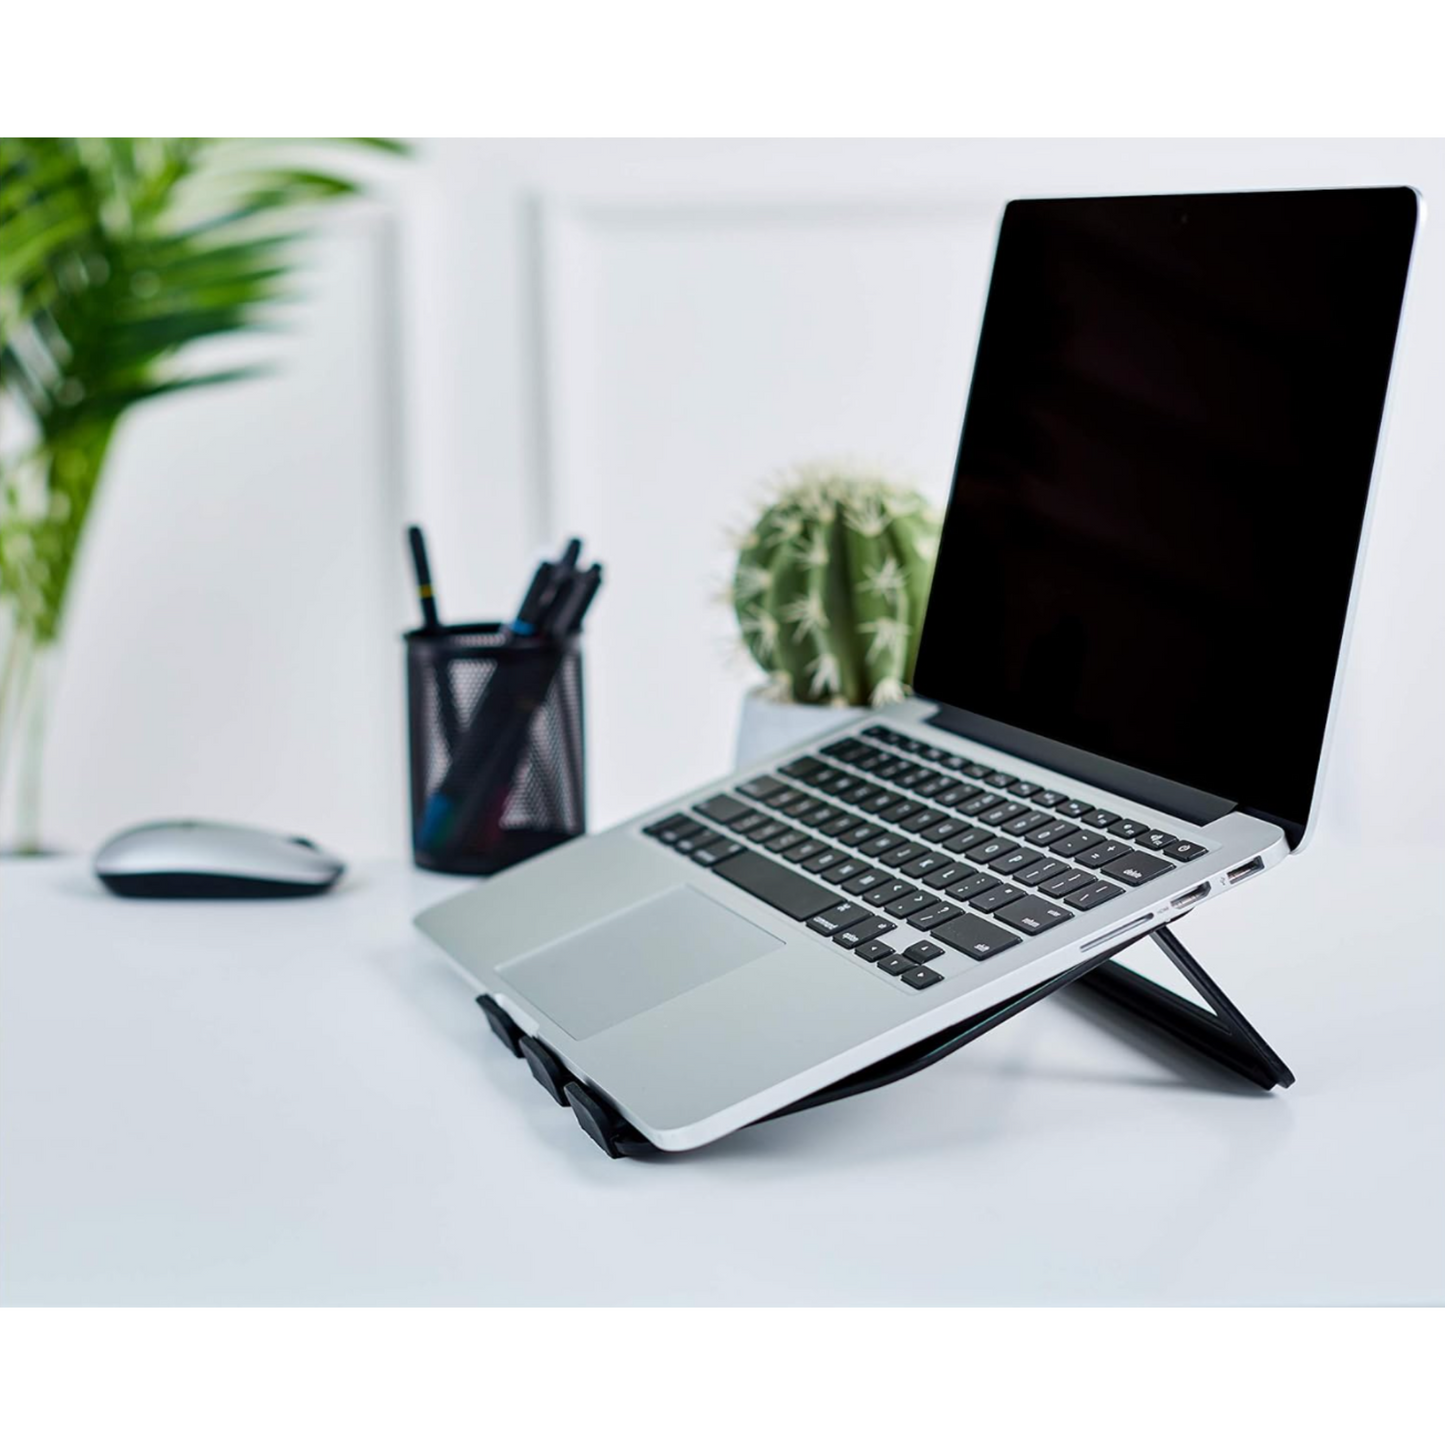 Amazon Basics Aluminum Portable Foldable Laptop Support Stand for Laptops up to 13", Black